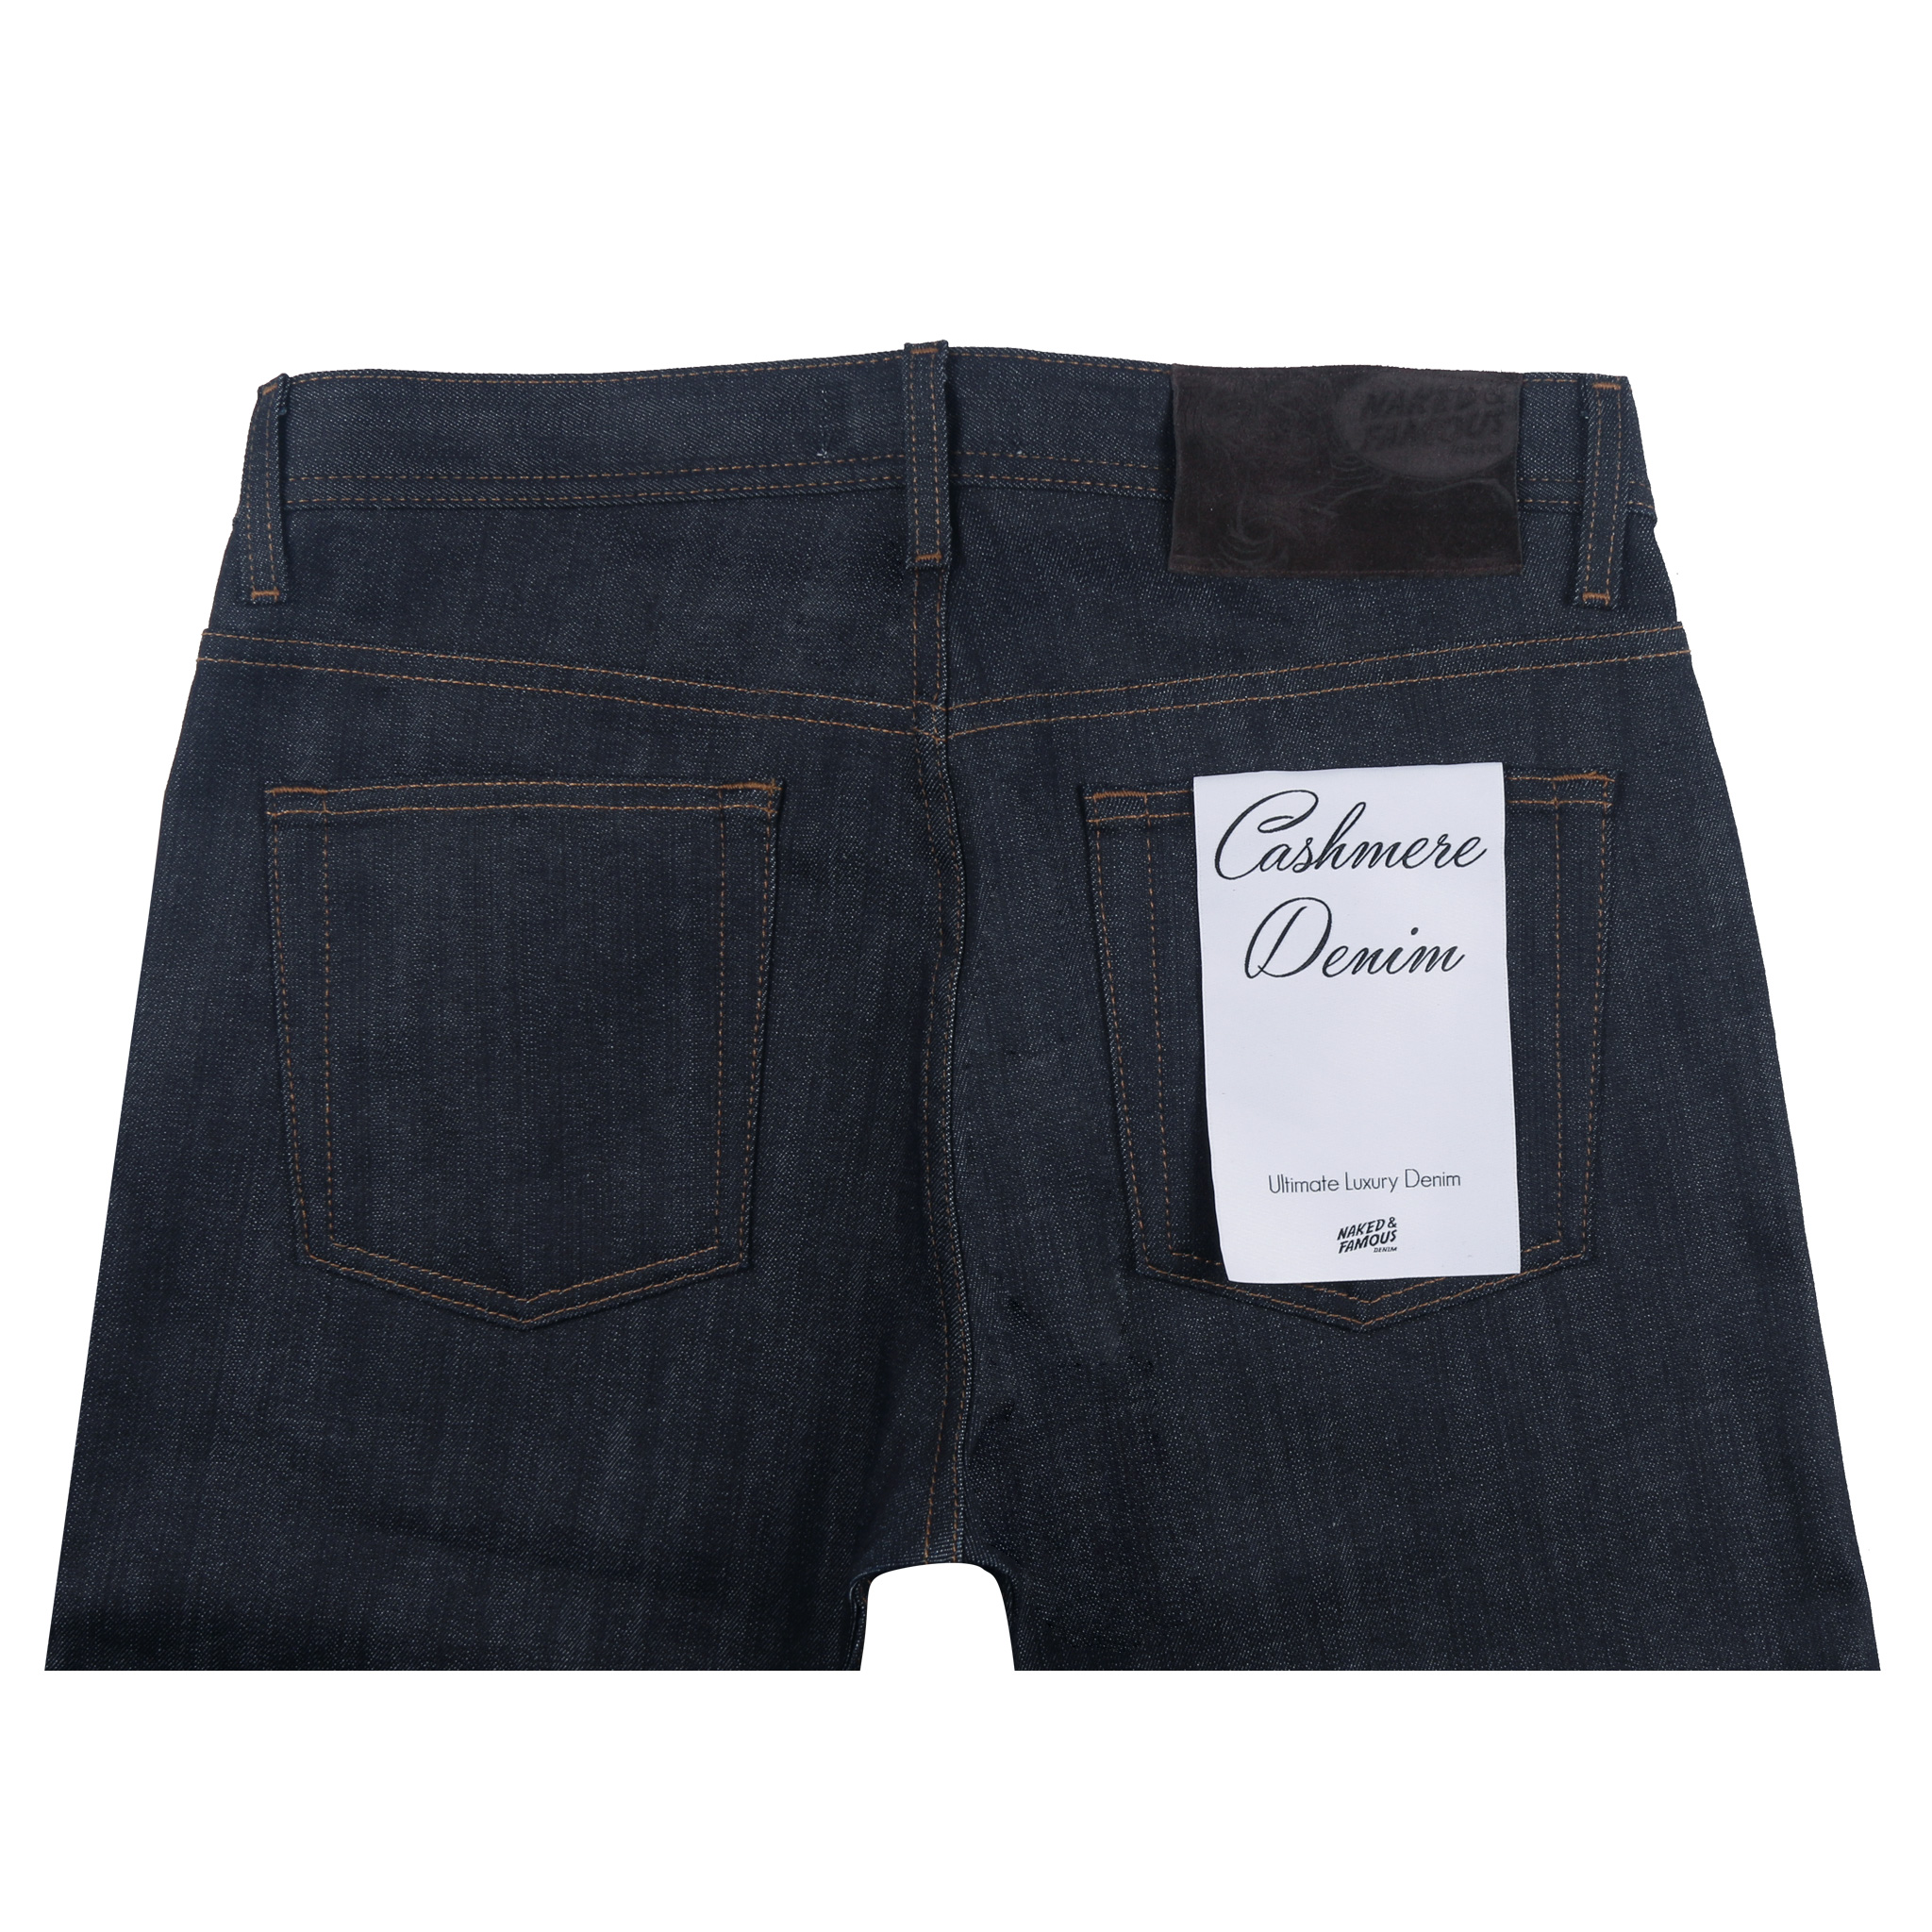  Cashmere Blend Stretch Denim Jeans Back 